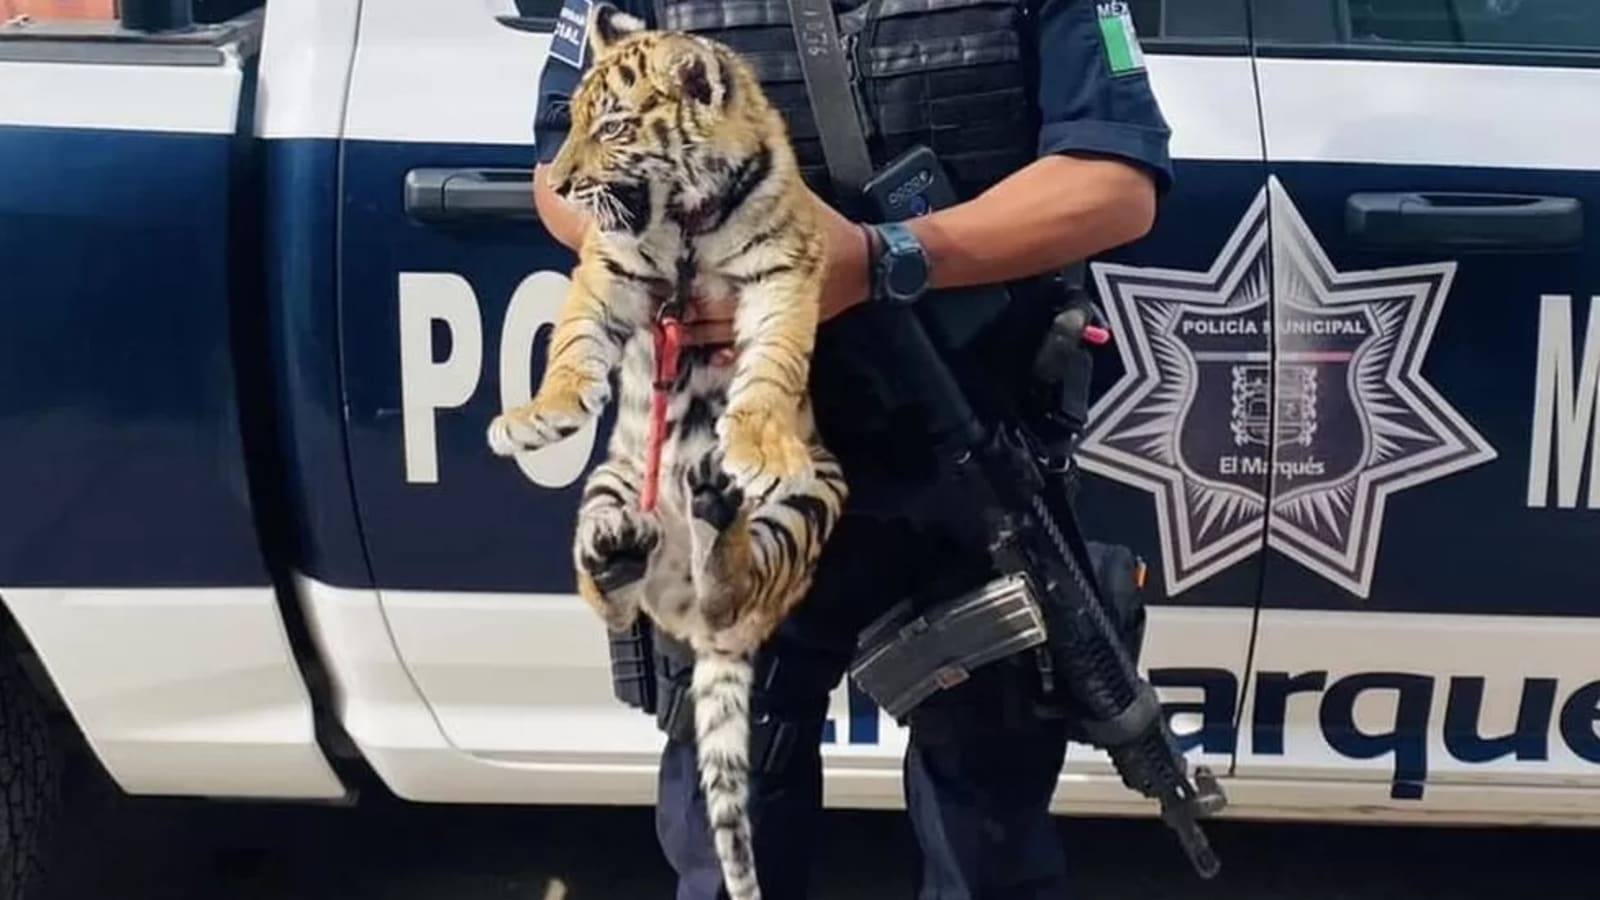 Tiger found in trunk